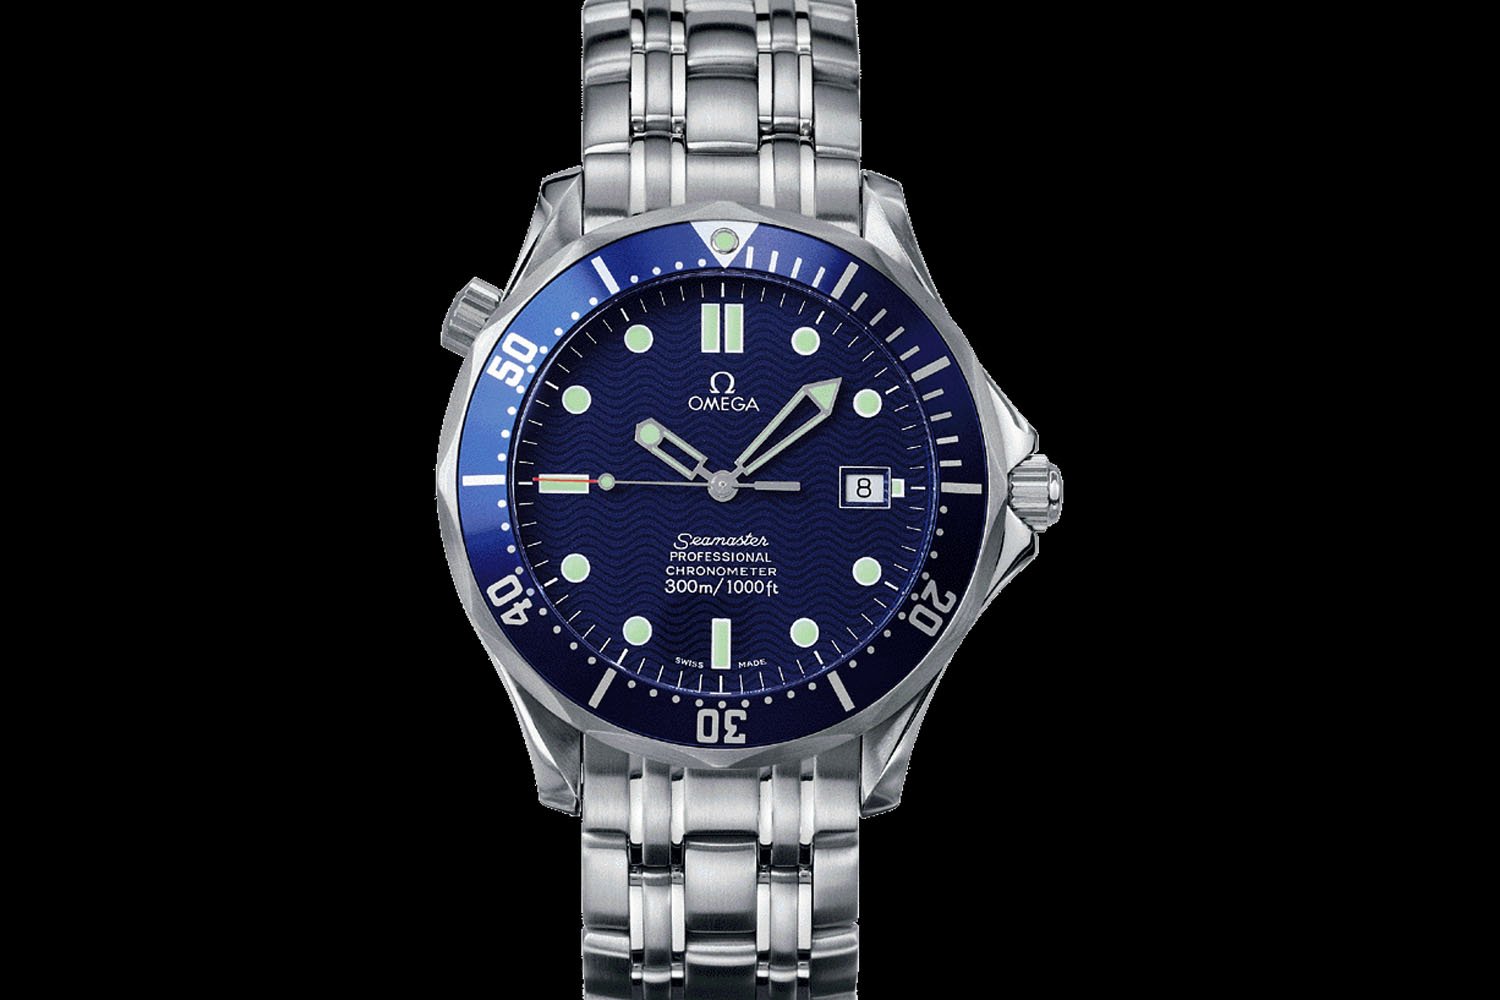 Omega Seamaster 300m professional chronometer 007 - ref 2531.80.00